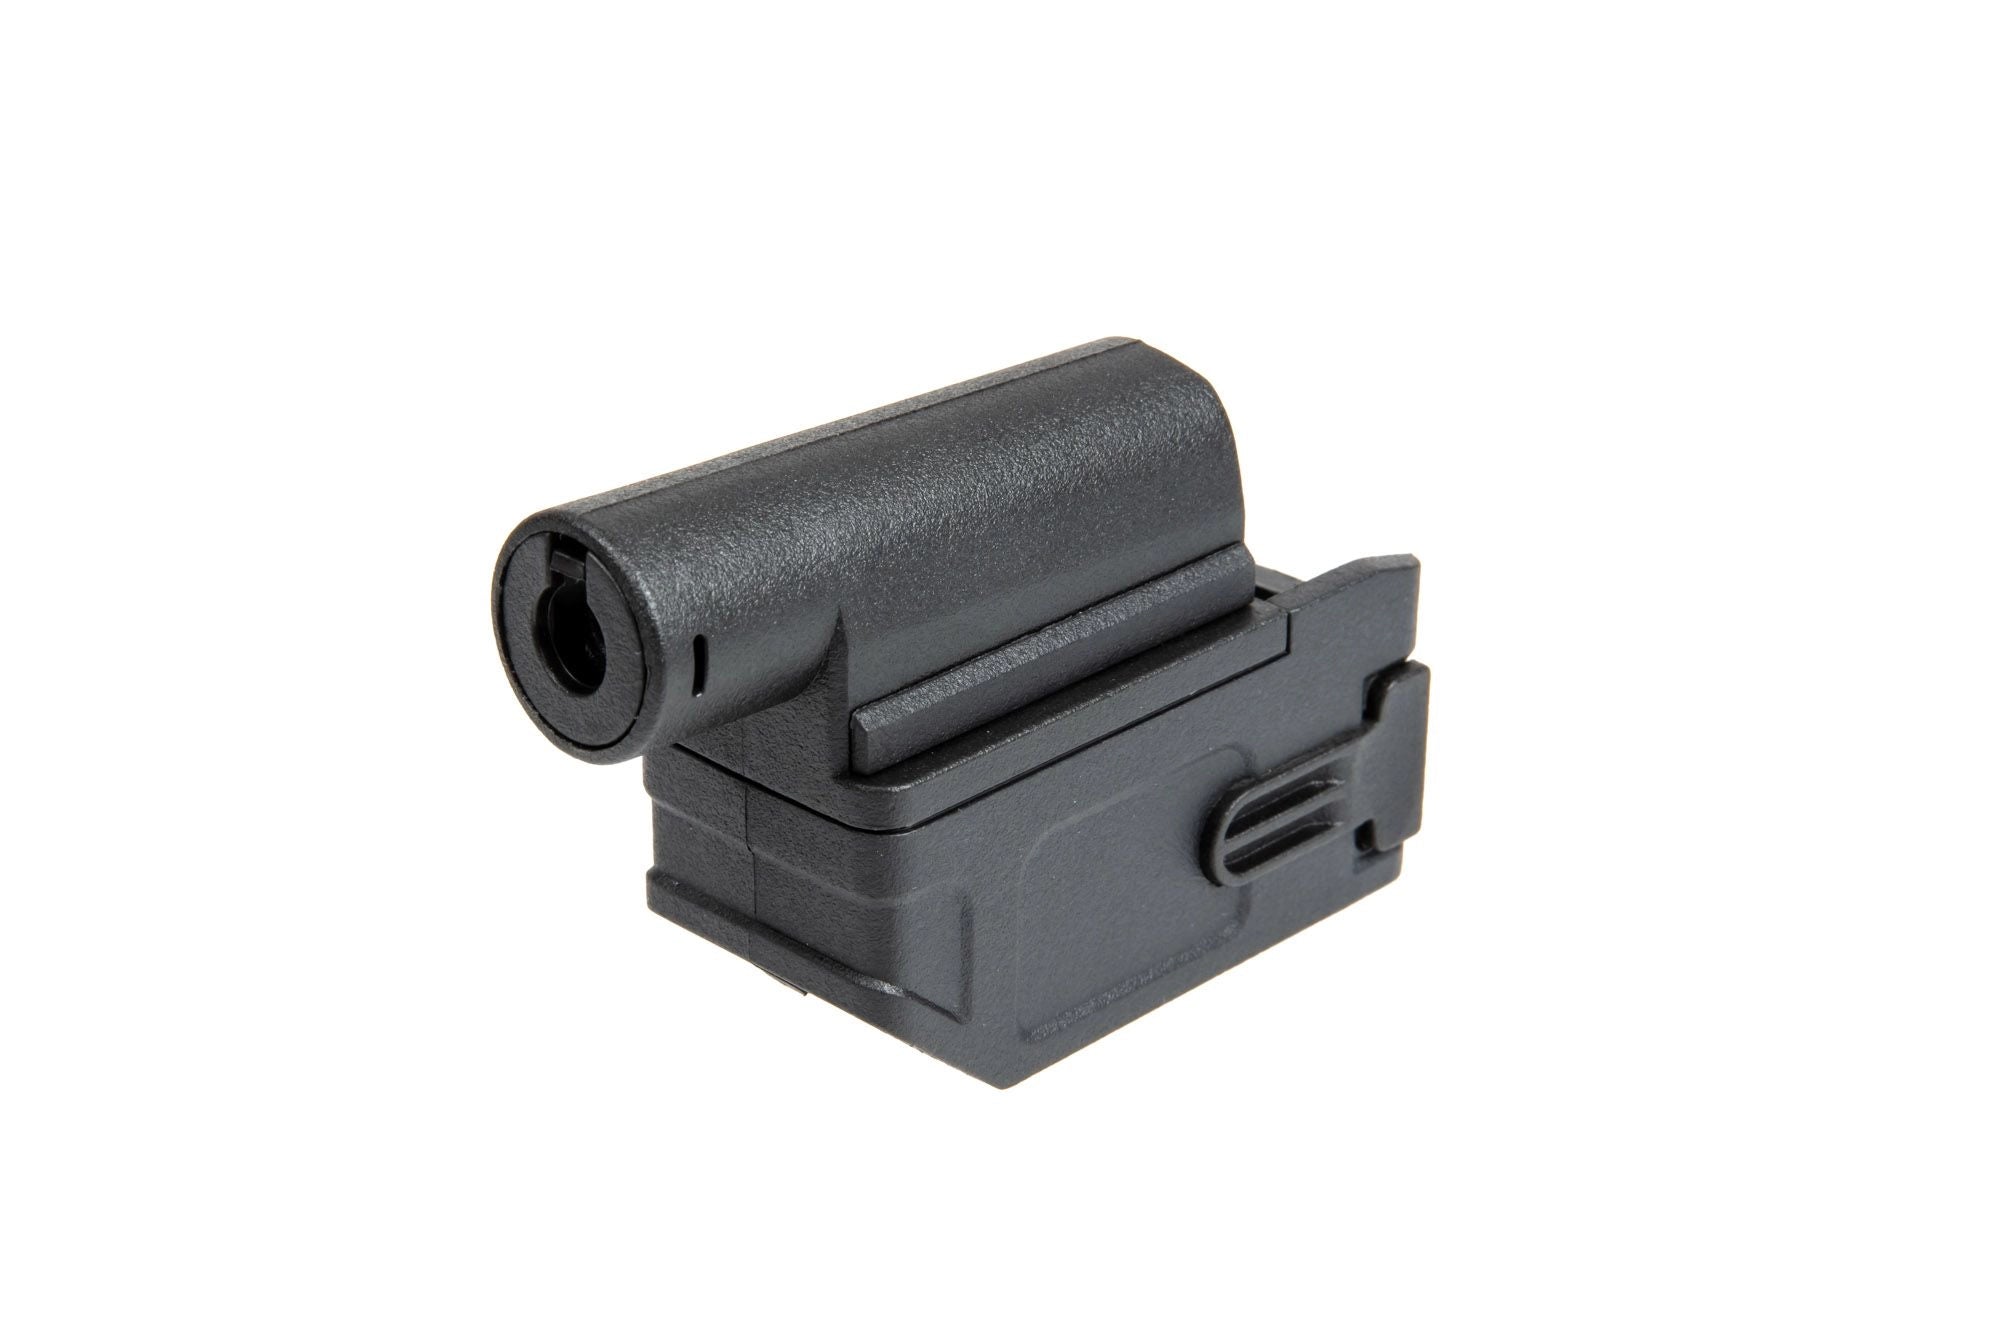 M4/M16 Magazine Adapter for Shotgun Replicas - Black